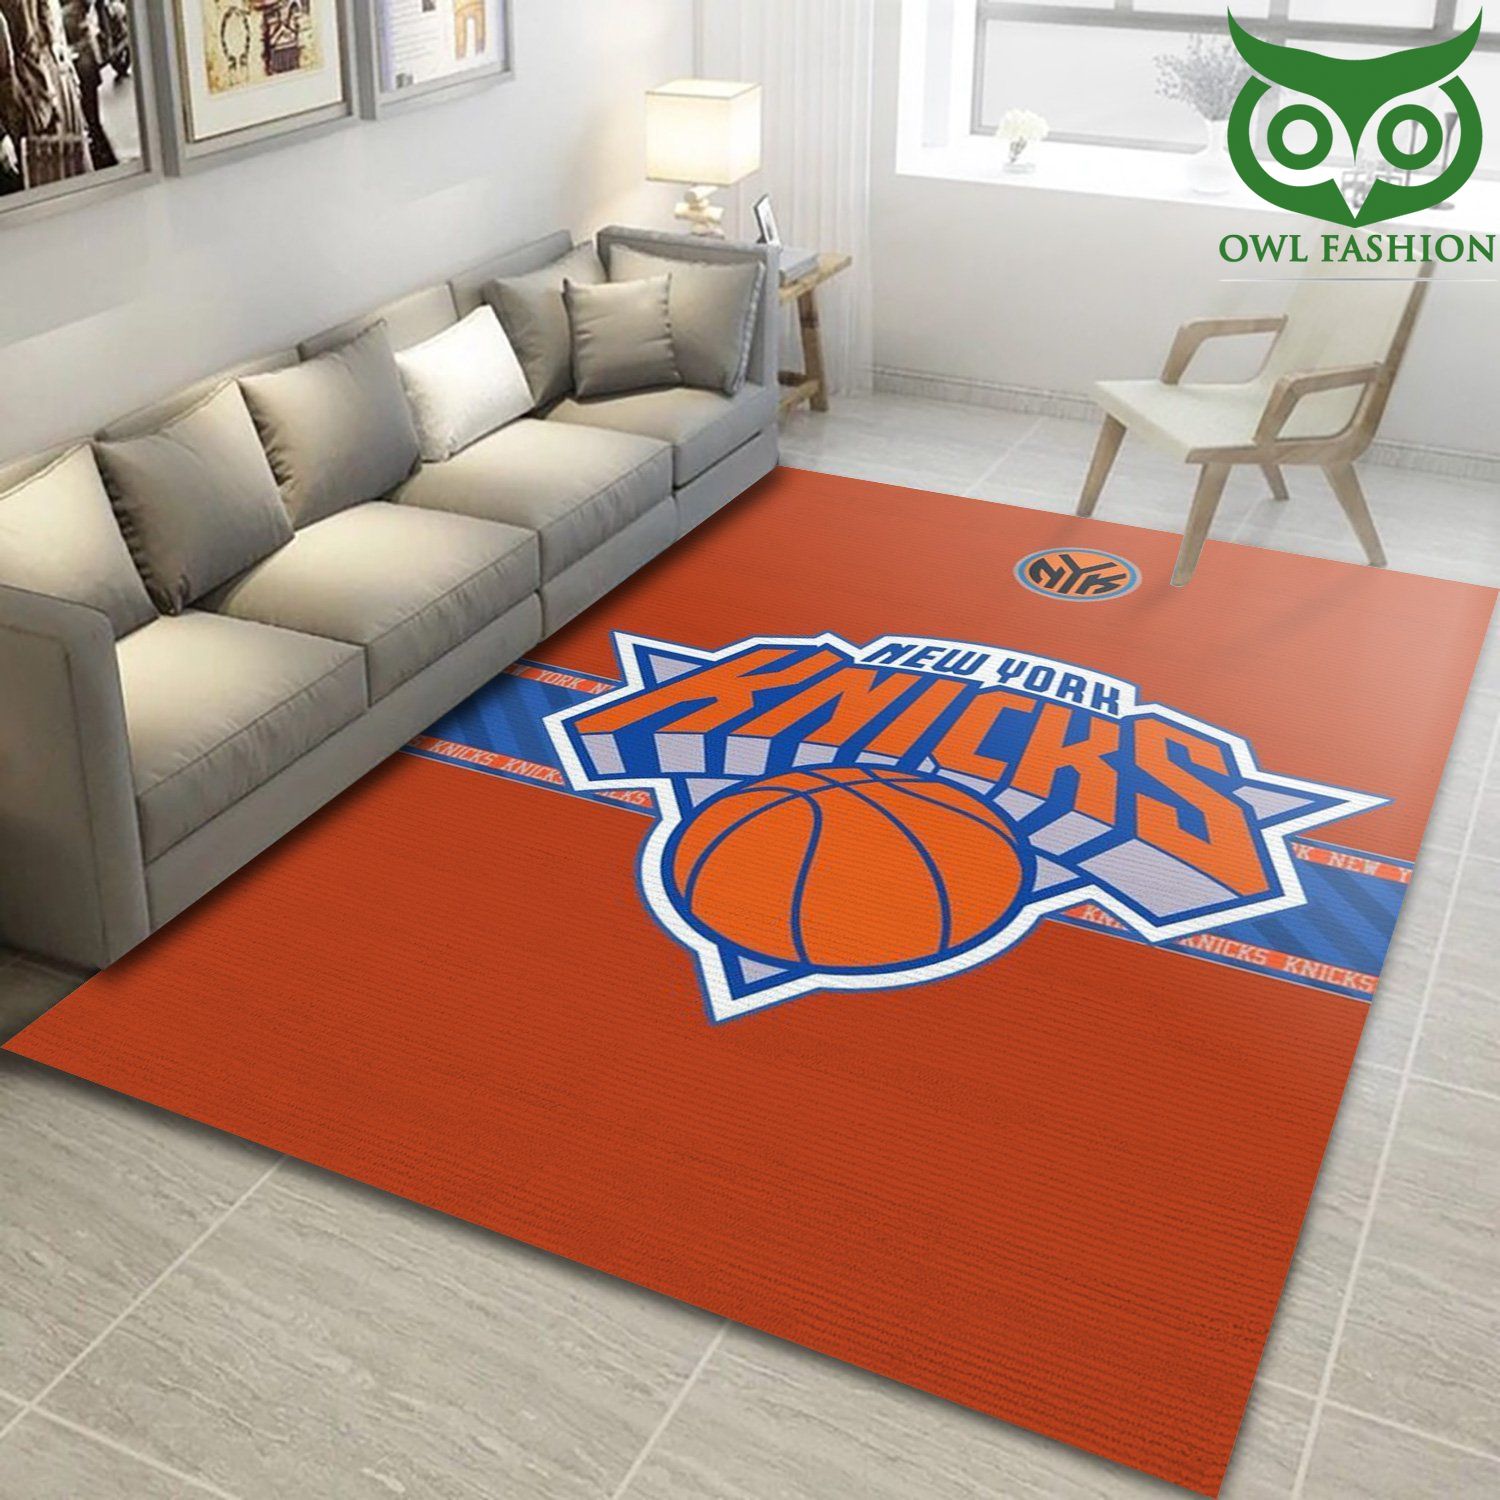 New York Knicks Team NBA carpet rug